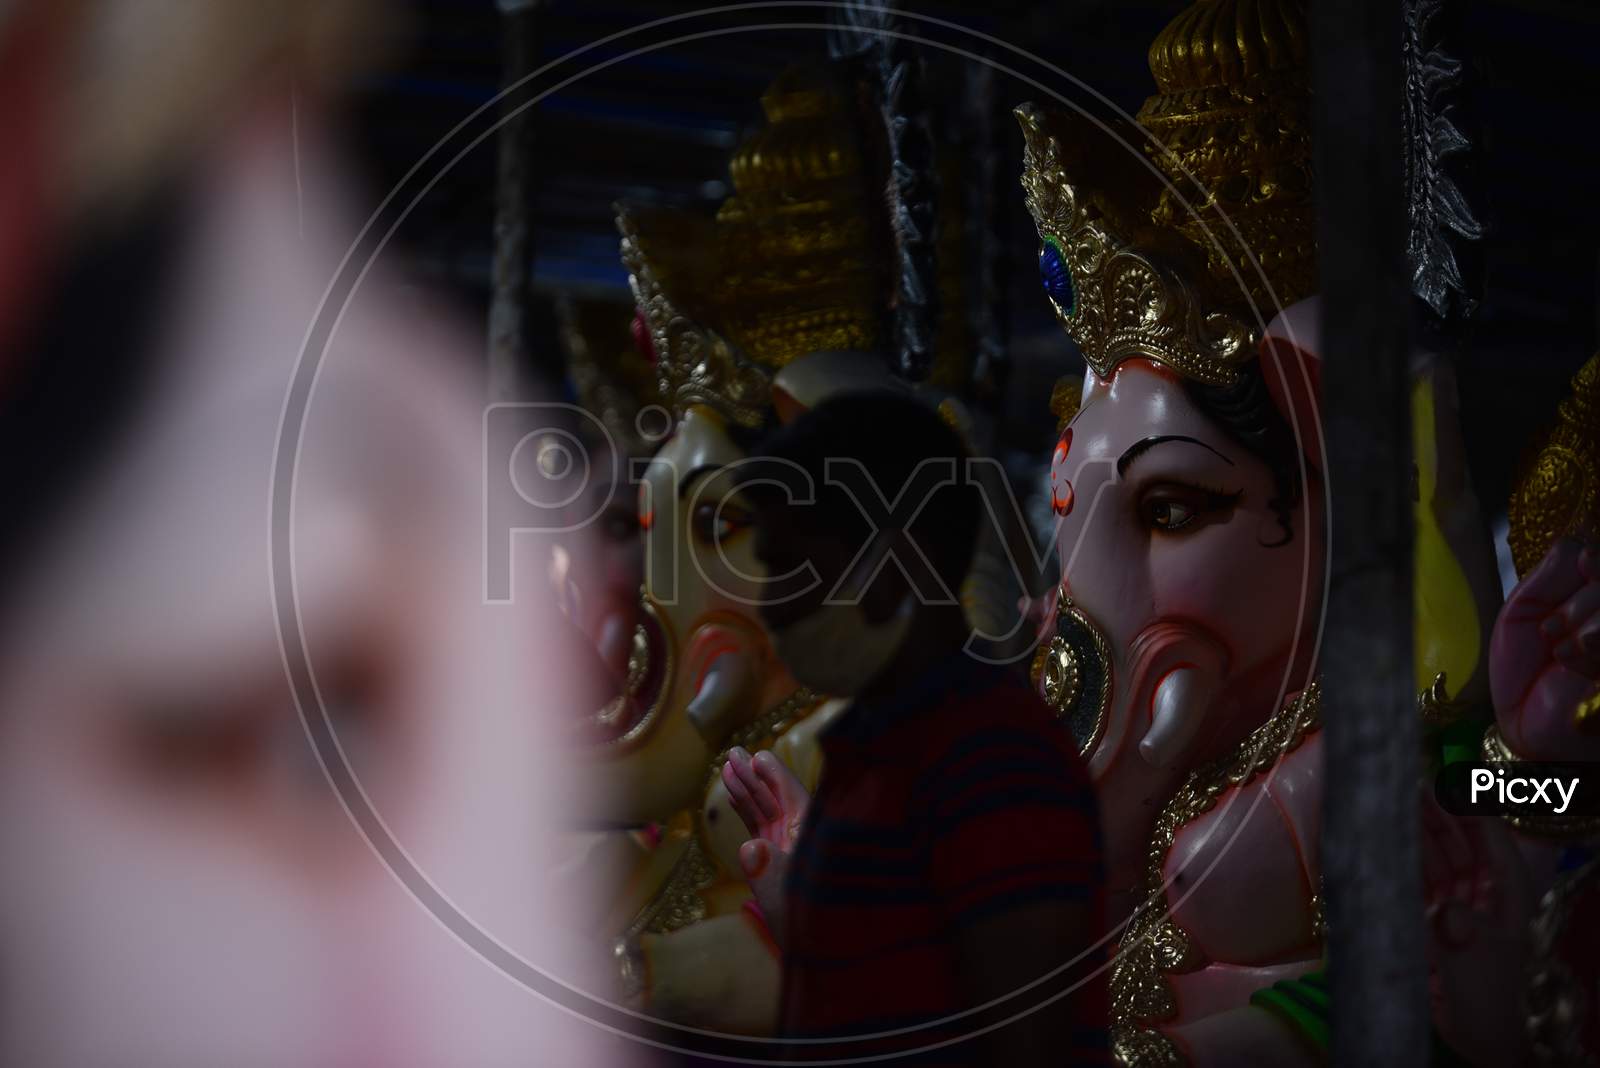 People wearing facemasks buy idols of Hindu deity , Lord Ganesh ahead of Ganesh Chaturthi in Hyderabad, August 21,2020.